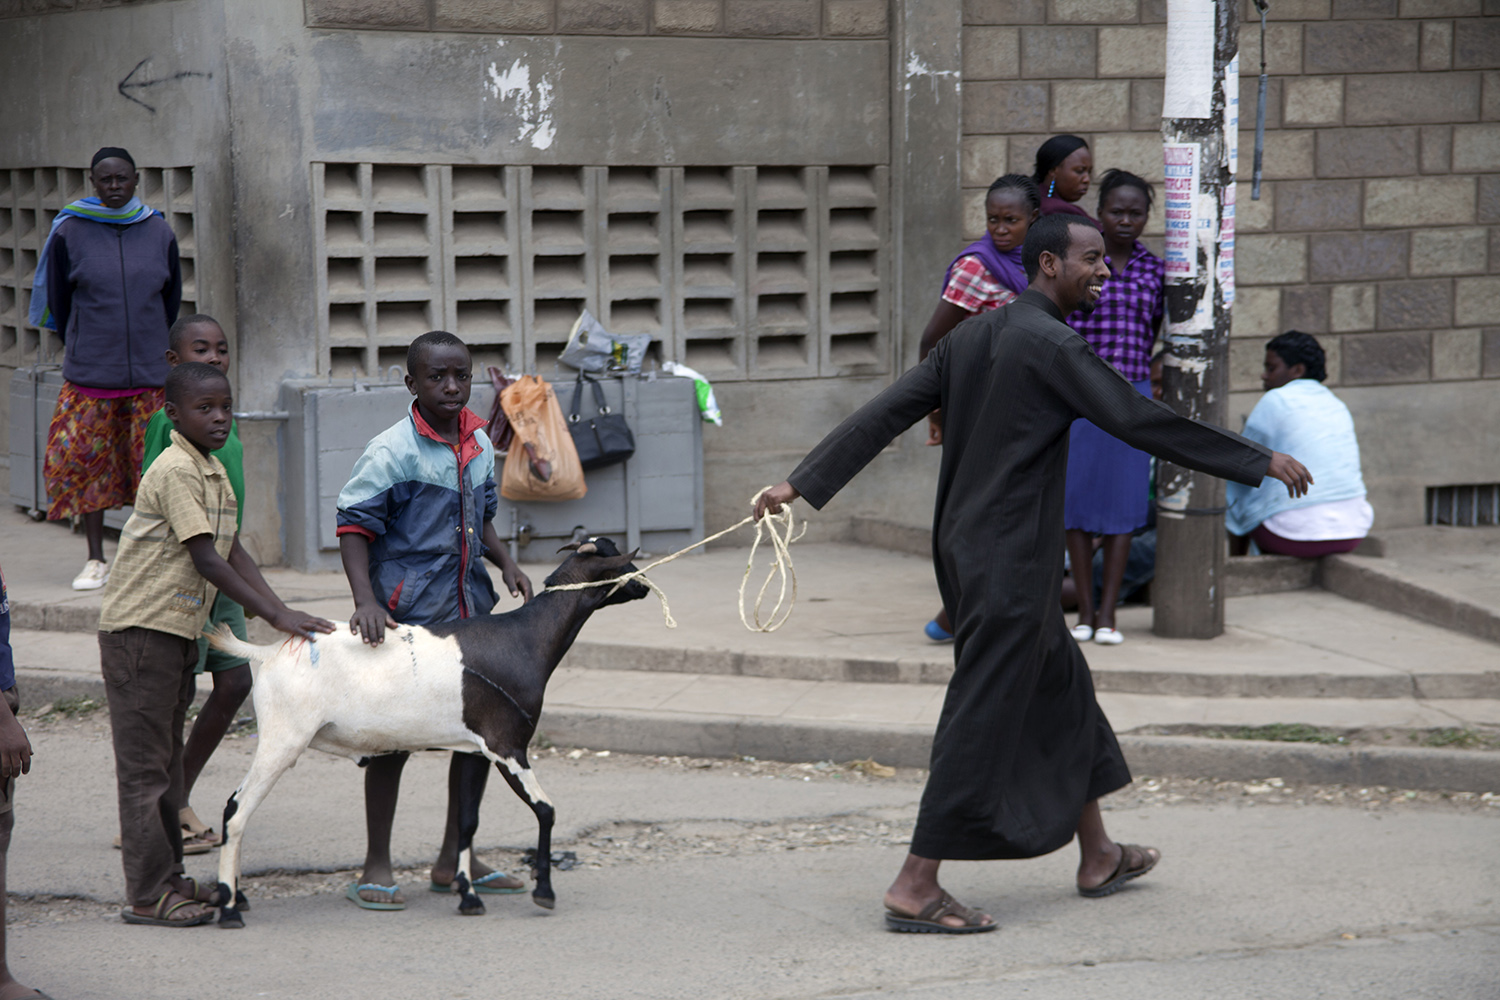 Kenia acusará de intento de suicidio a los peatones que no respeten los pasos de cebra